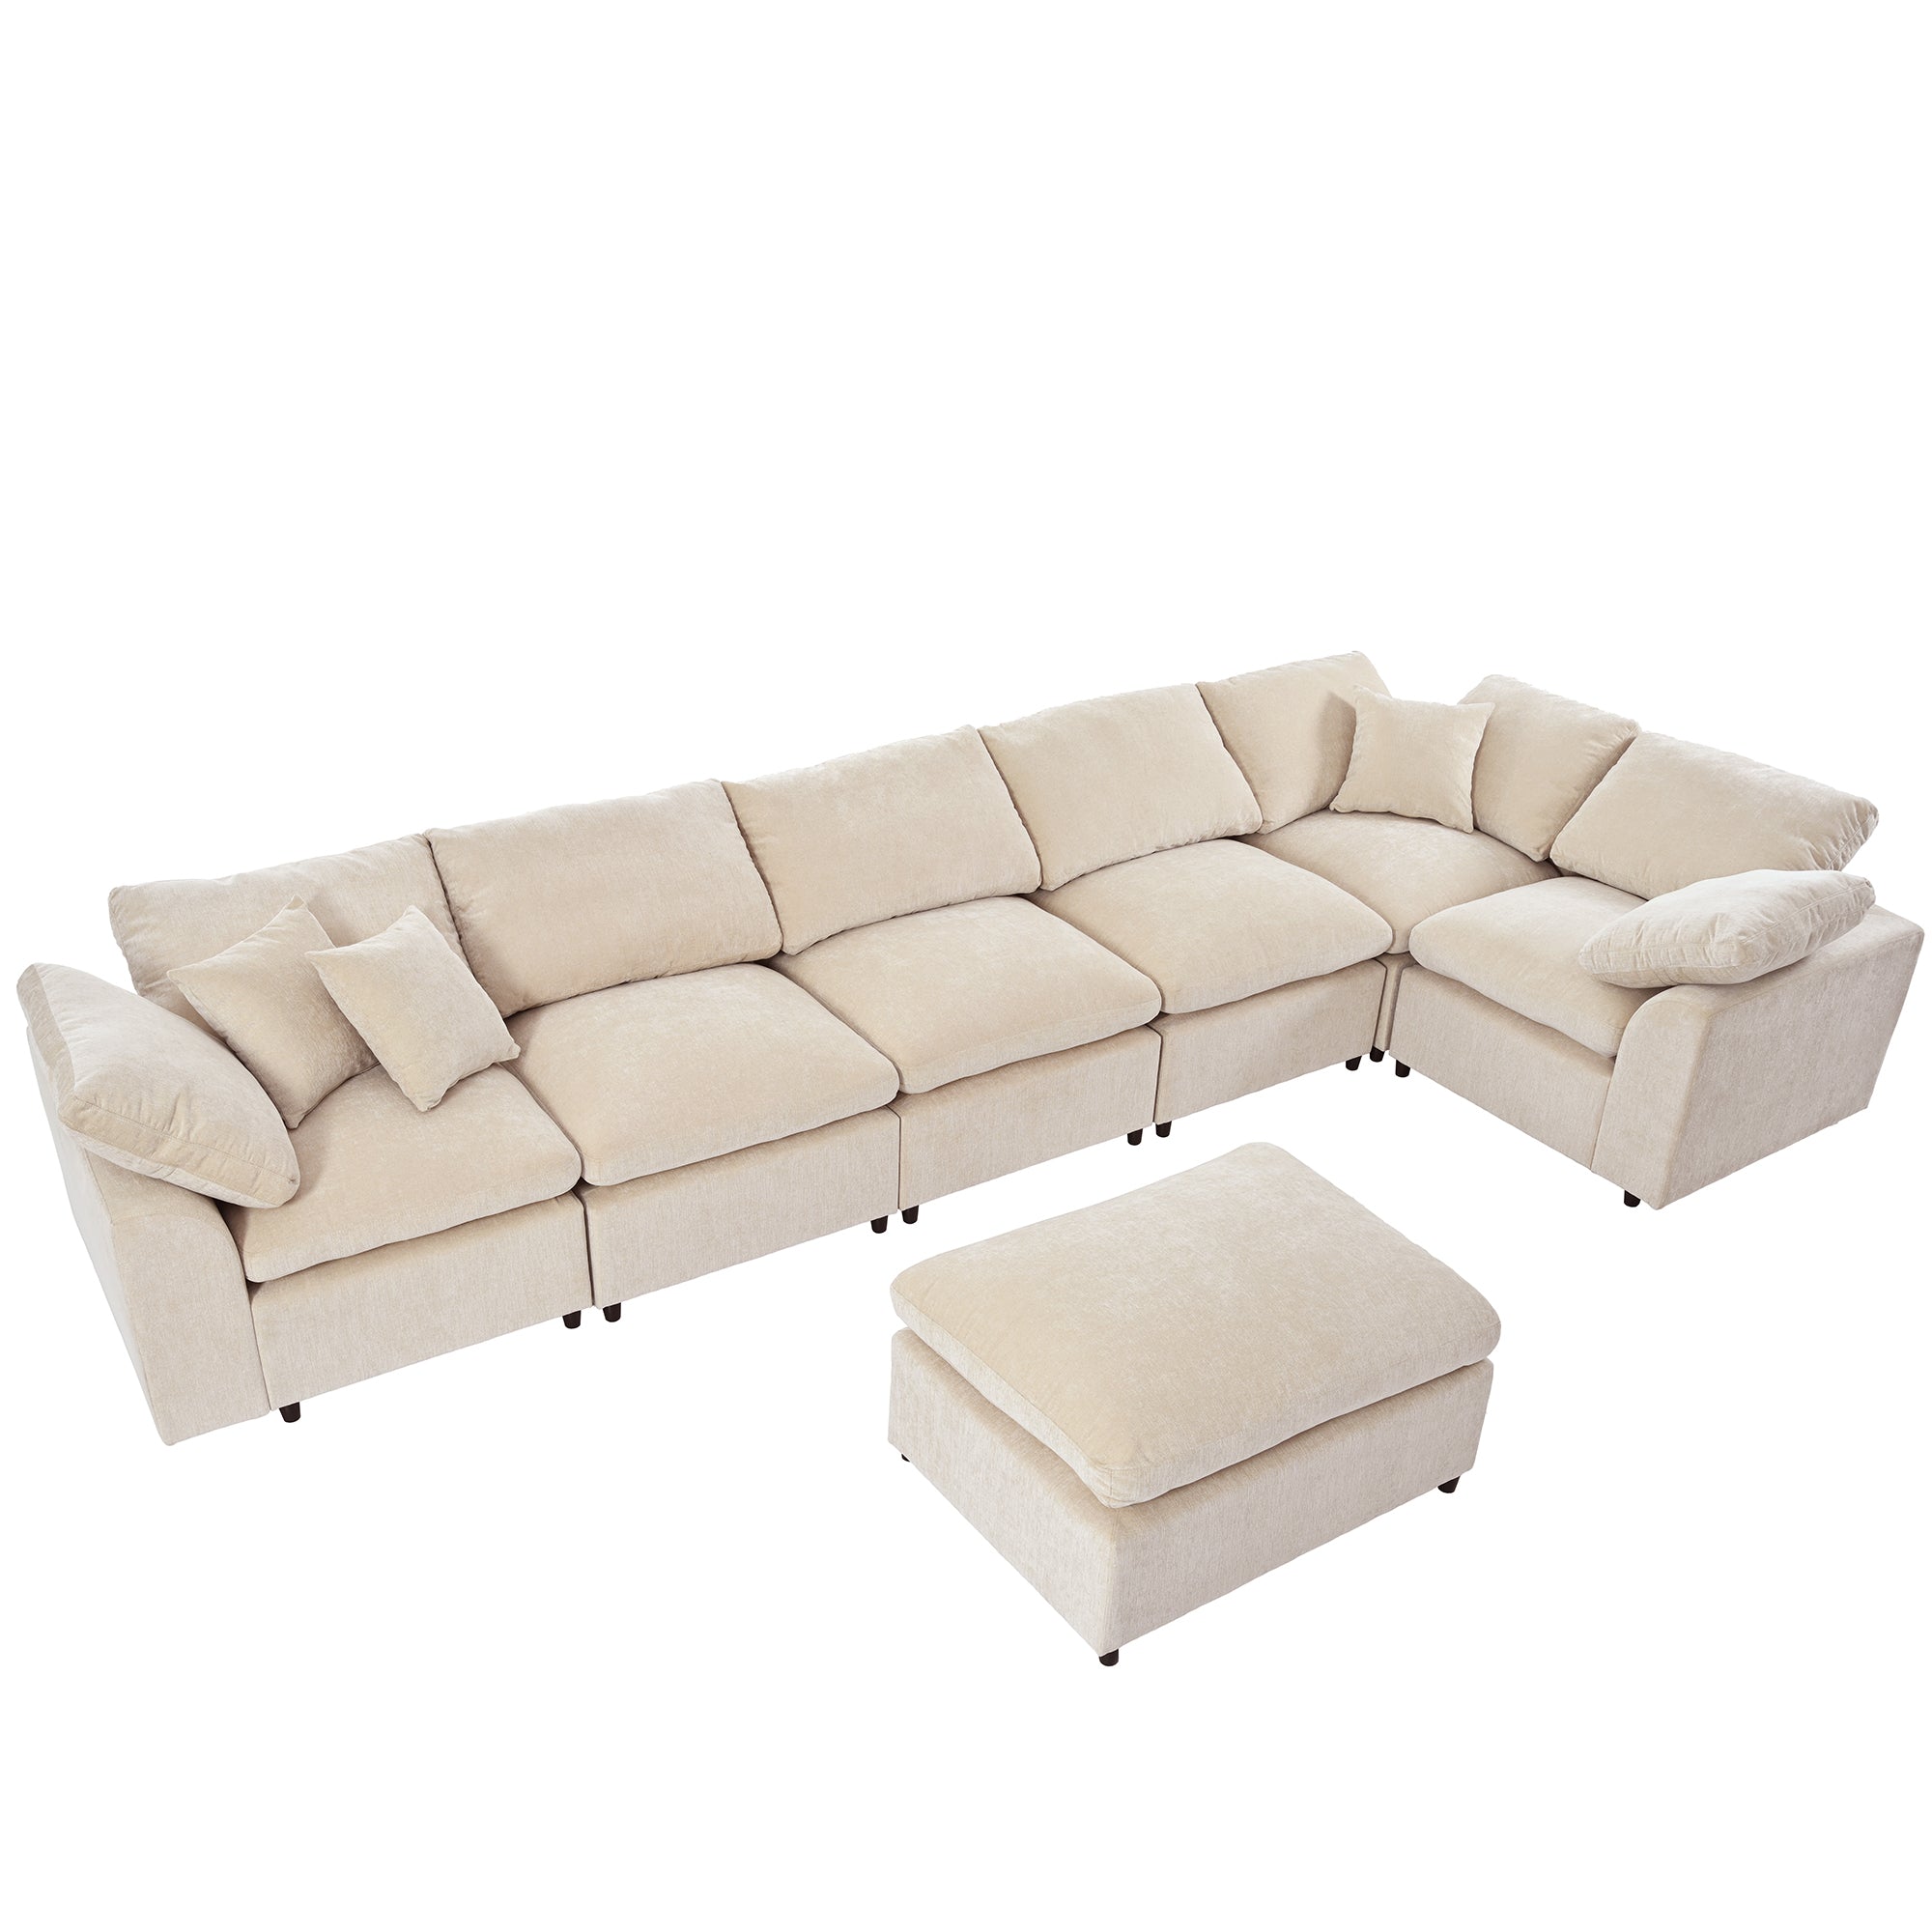 U_Style Oversized Modular Sectional Sofa with Ottoman